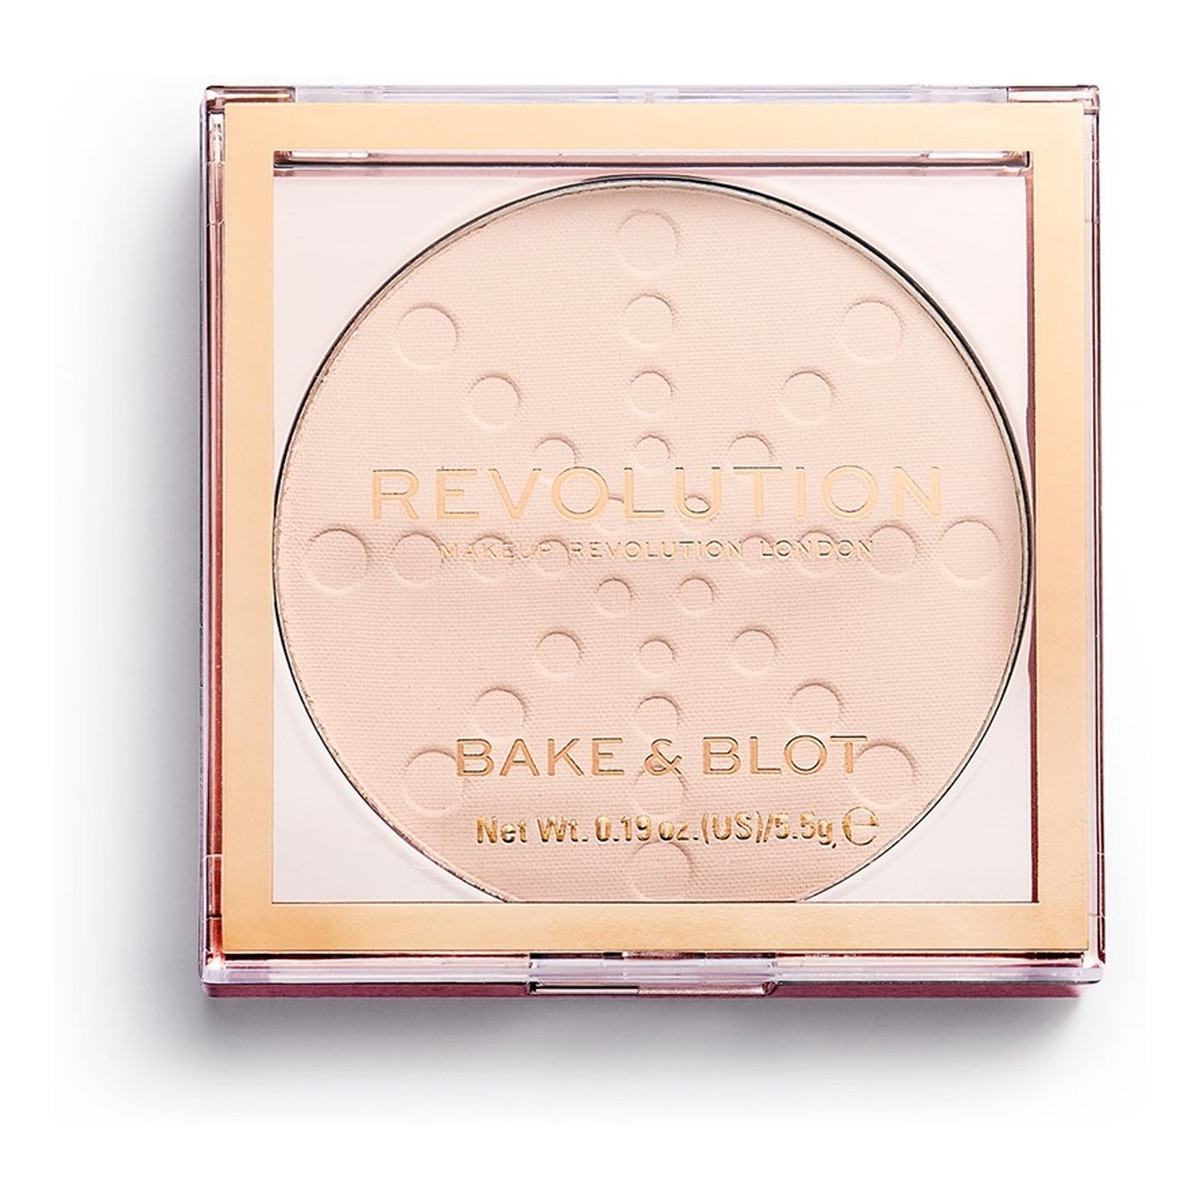 Makeup Revolution Bake&Blot Puder Prasowany 5g